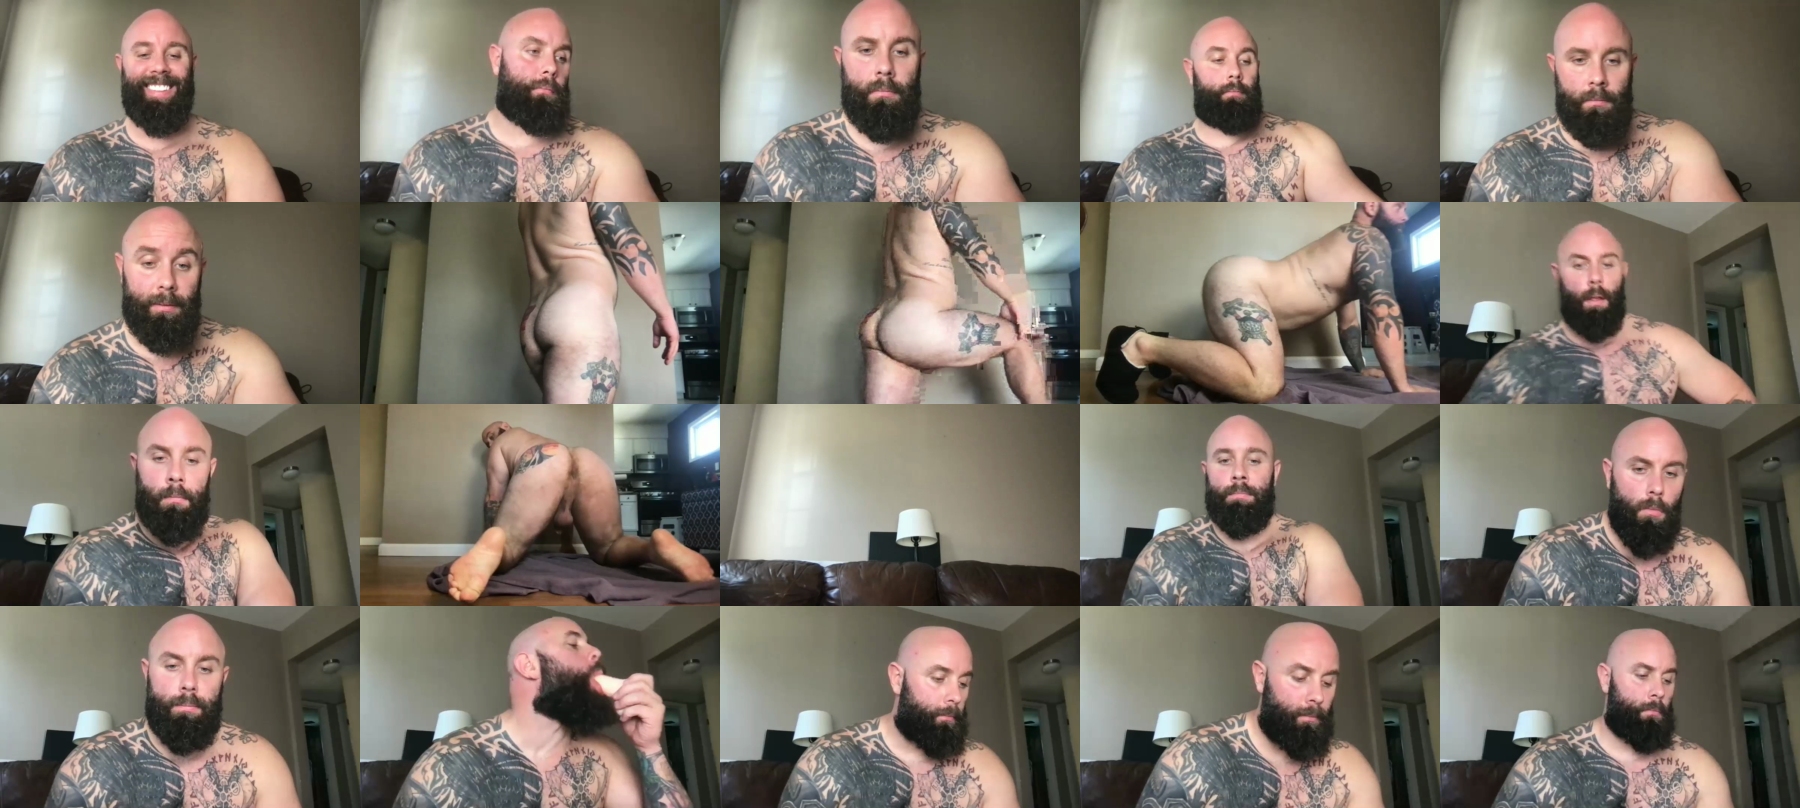 Straightboysub  14-09-2021 video topless